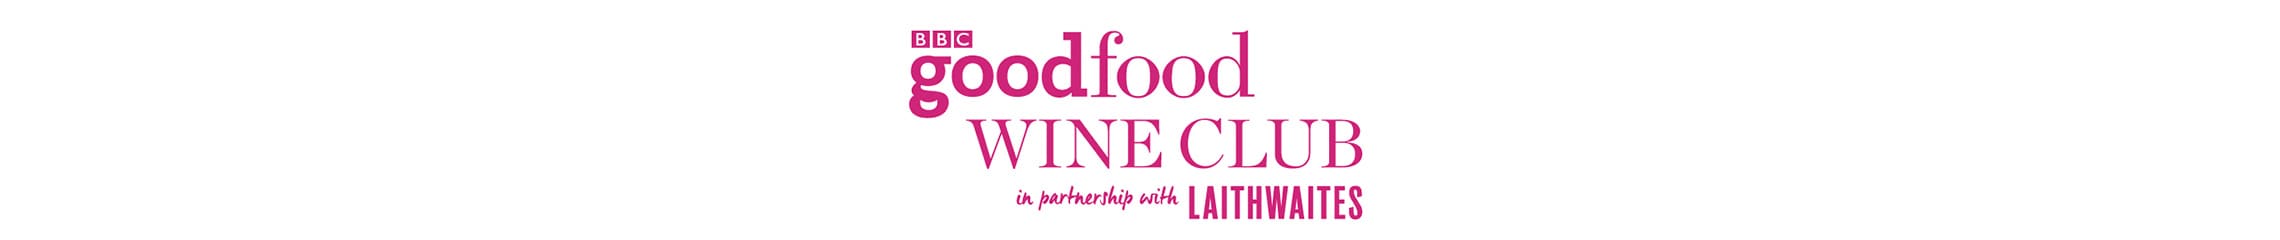 BBC Good Food Wine Club